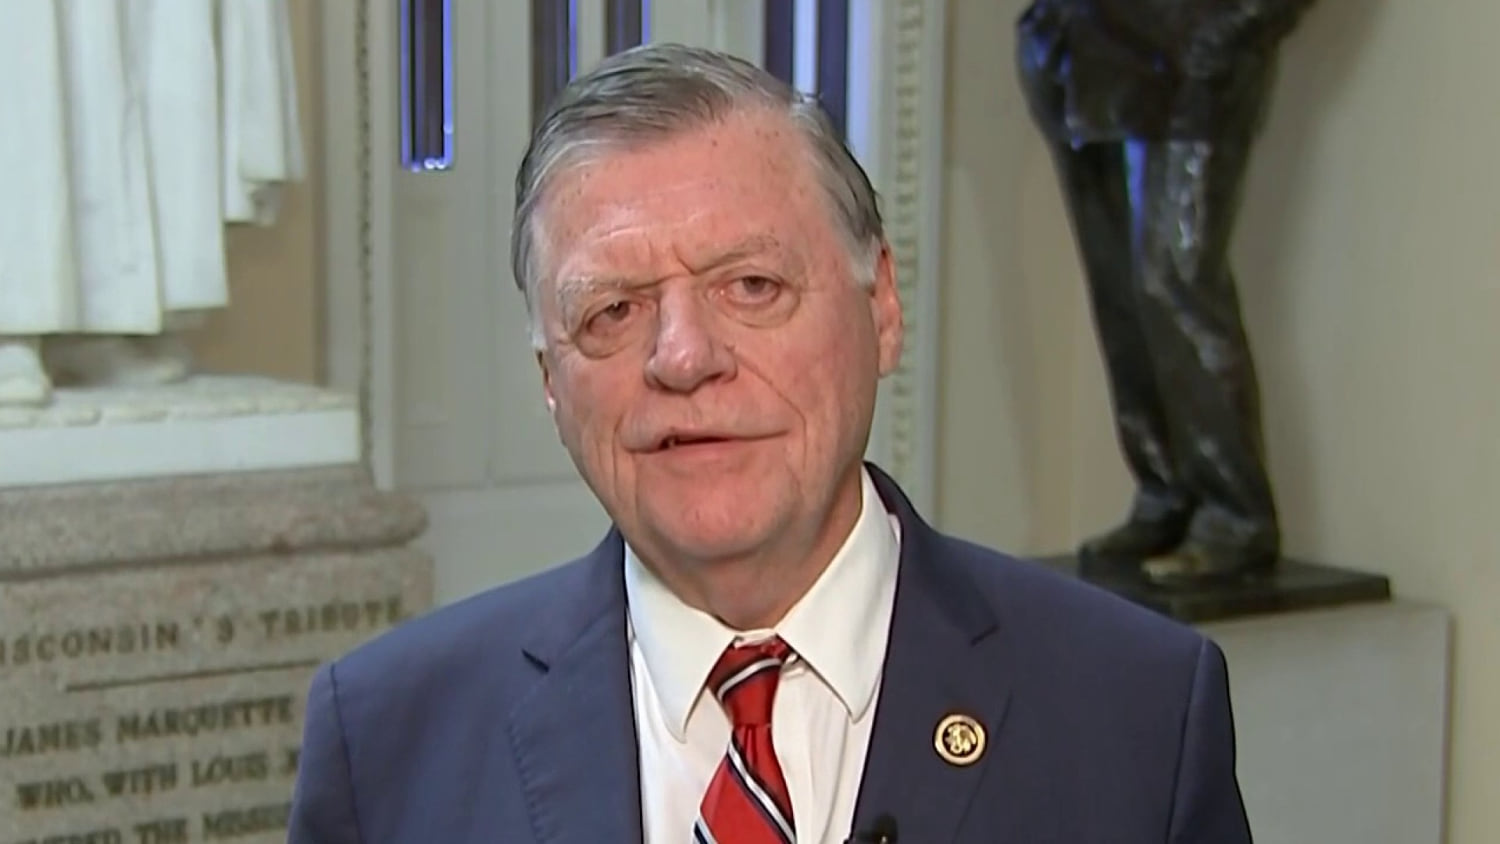 Republican Congressman: The House is ‘not at all’ broken